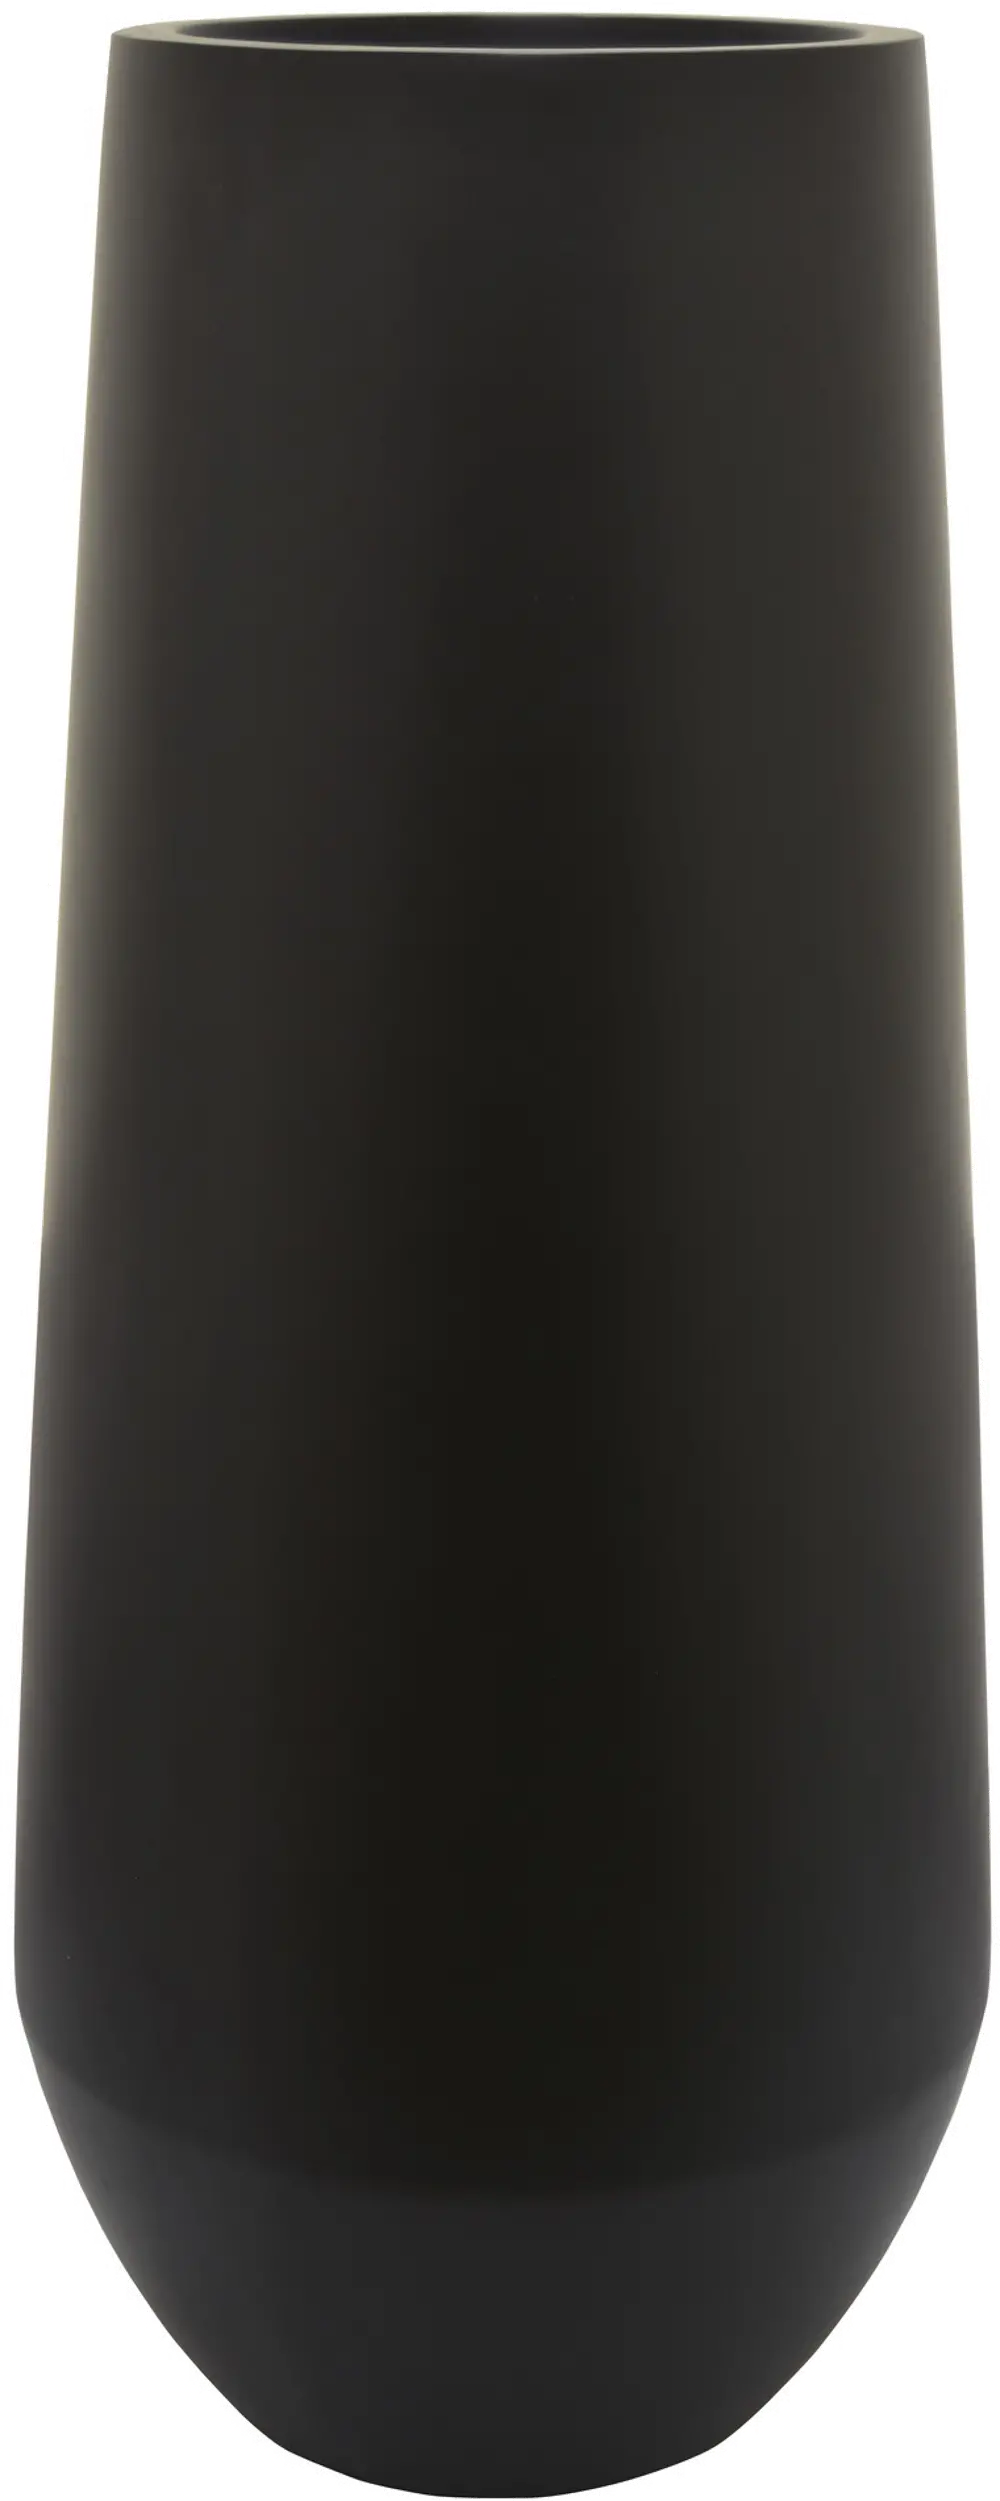 47 Inch Black Resin Planter-1